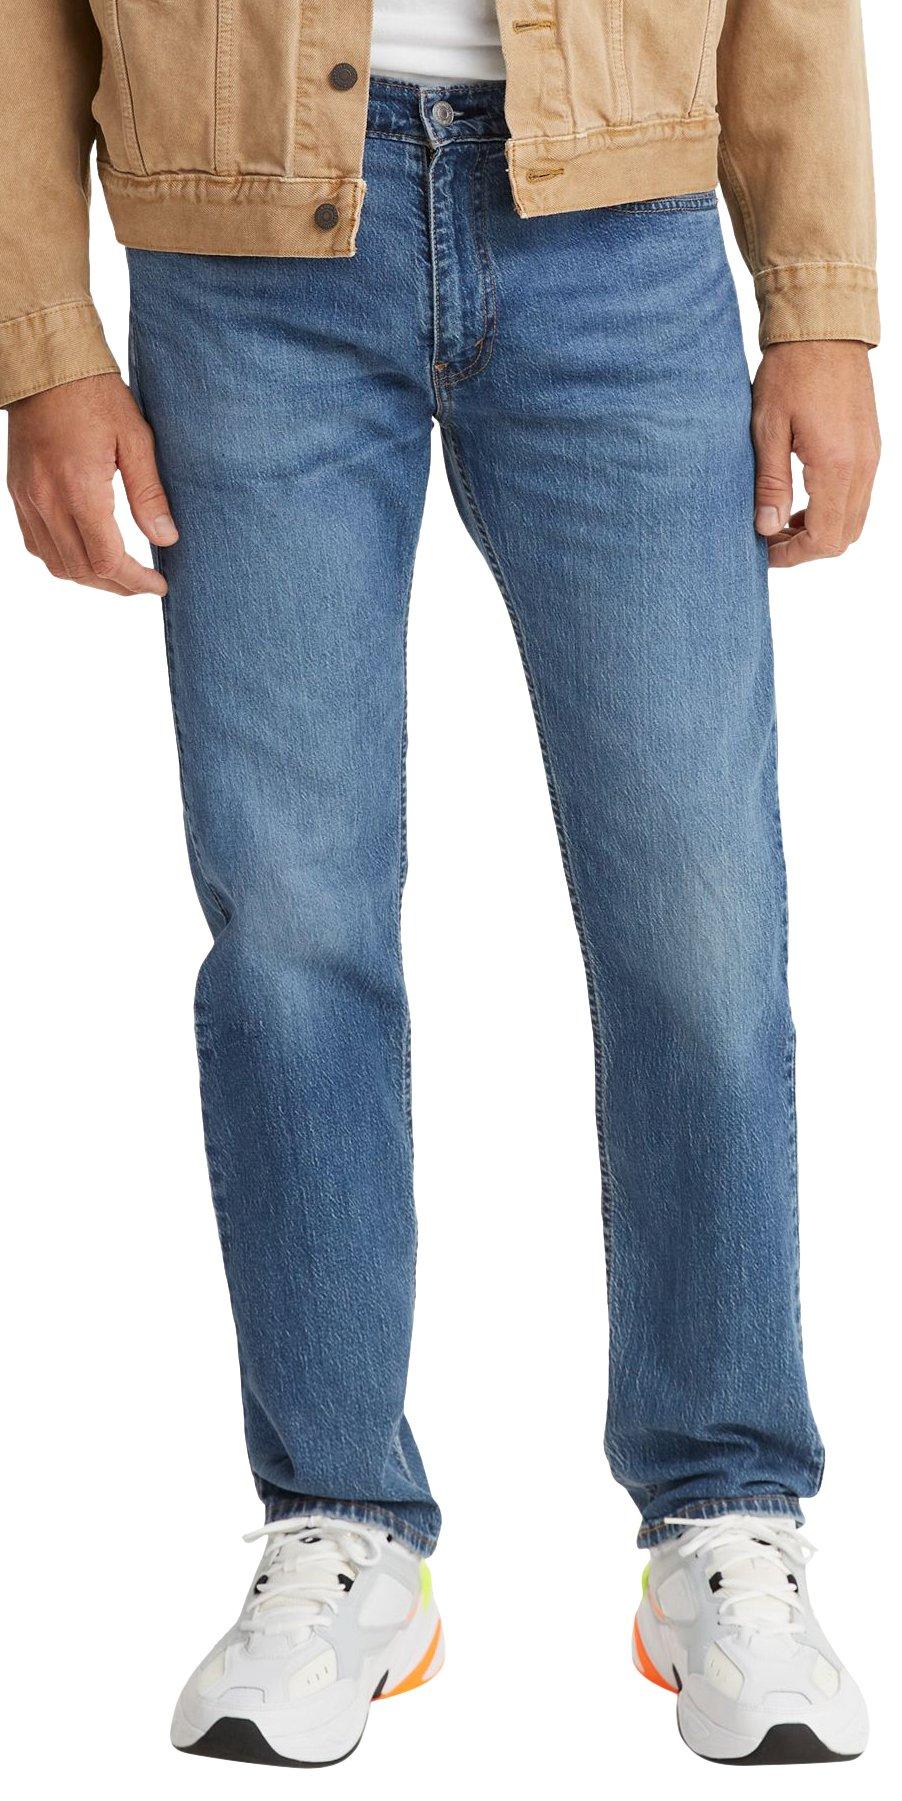 Levi's Mens 505 Regular Fit Denim Jeans